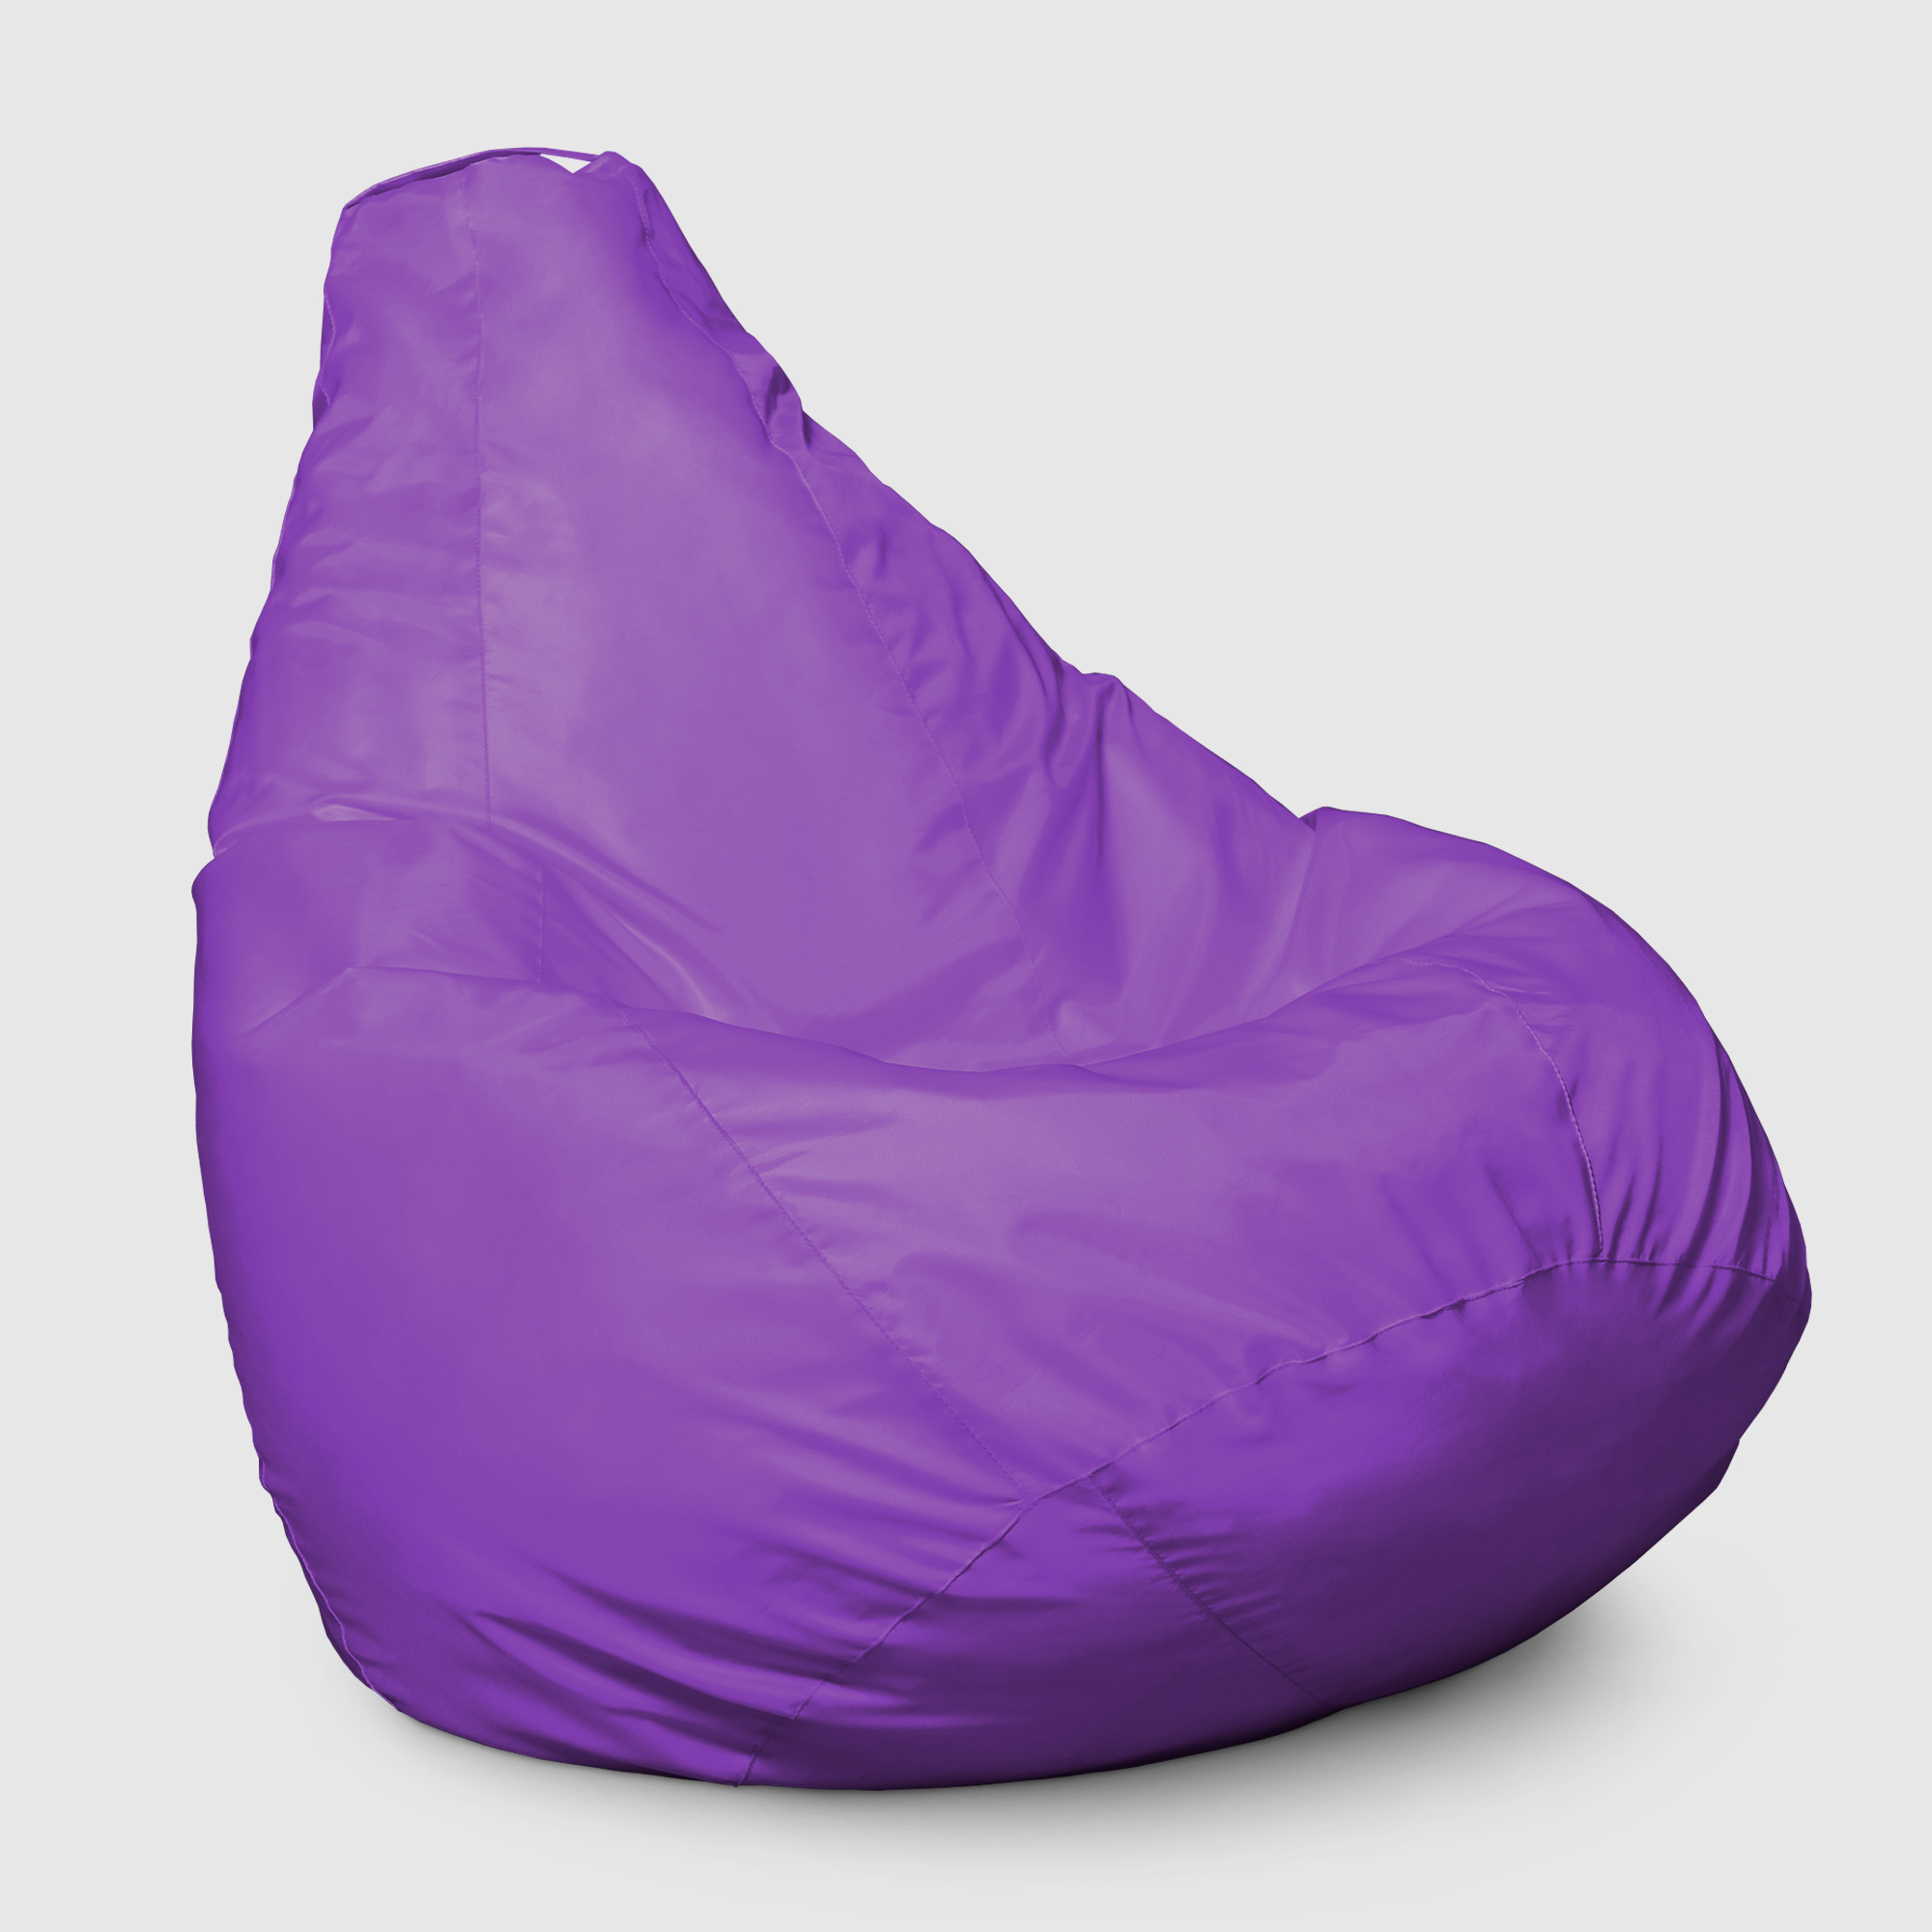 Кресло мешок Dreambag Меган xl фиолетовое 85х85х125 см кресло мешок dreambag меган xl зеленое 85х85х125см